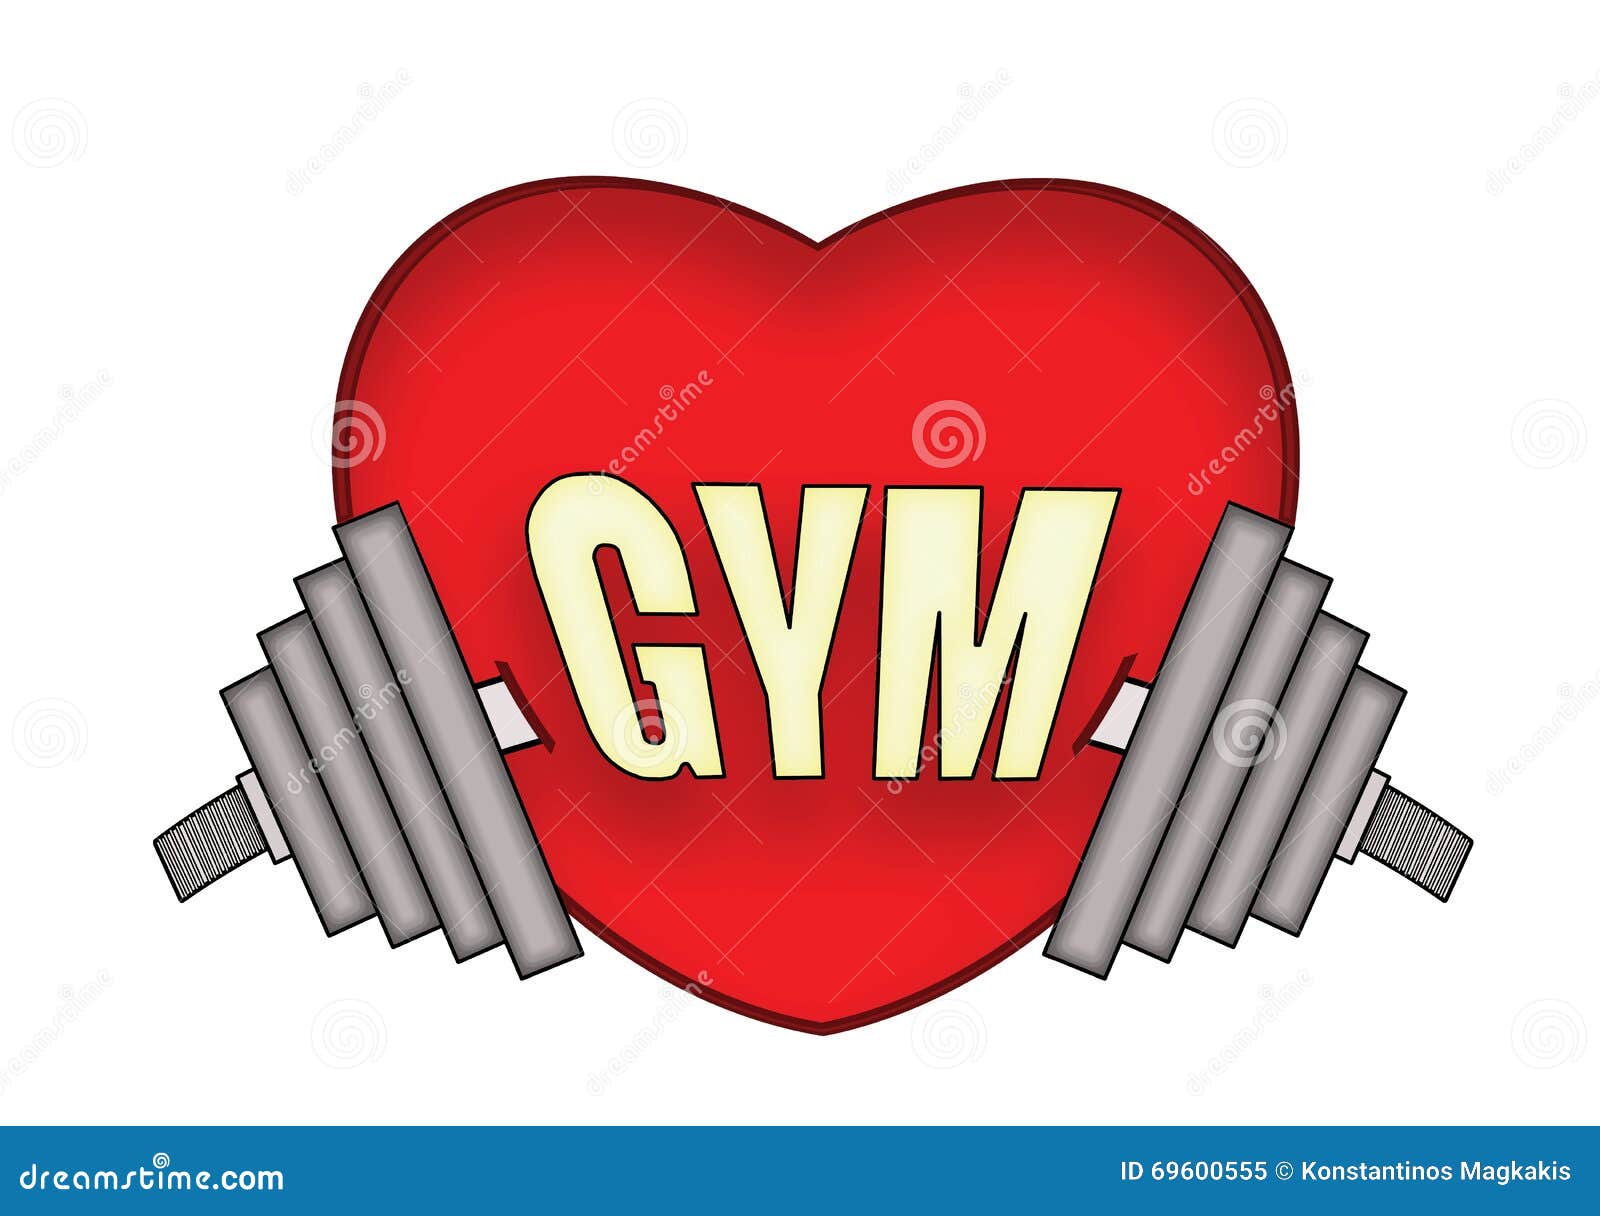 Джим лове. I Love Gym.